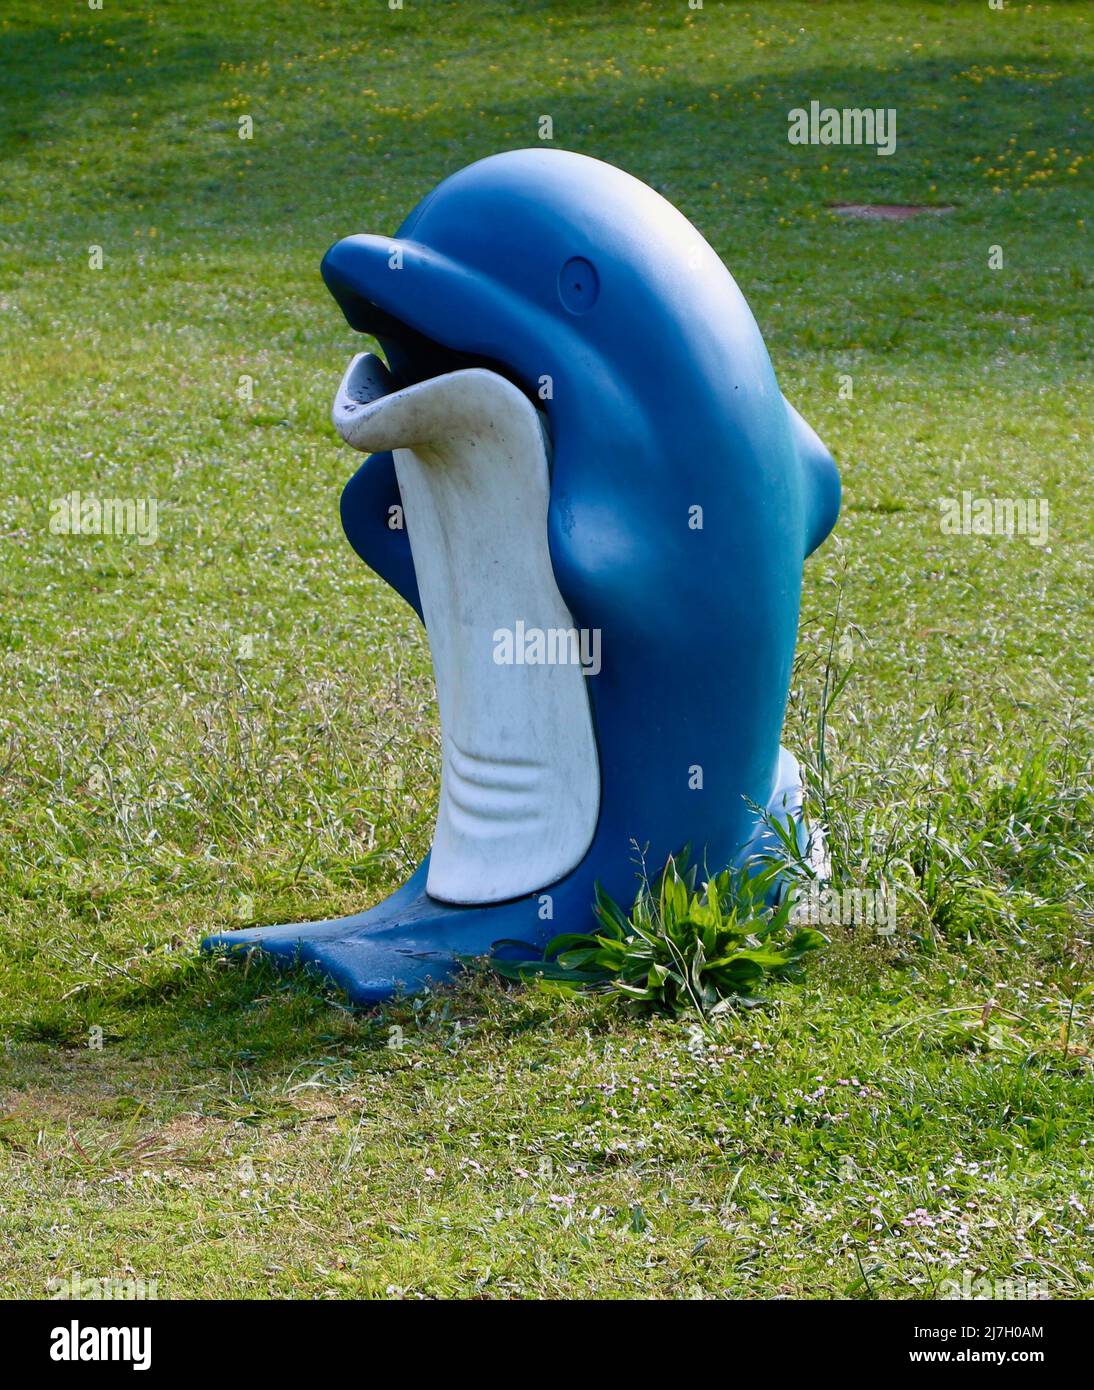 Blue and white plastic dolphin rubbish bin next to a children's playground  Stock Photo - Alamy